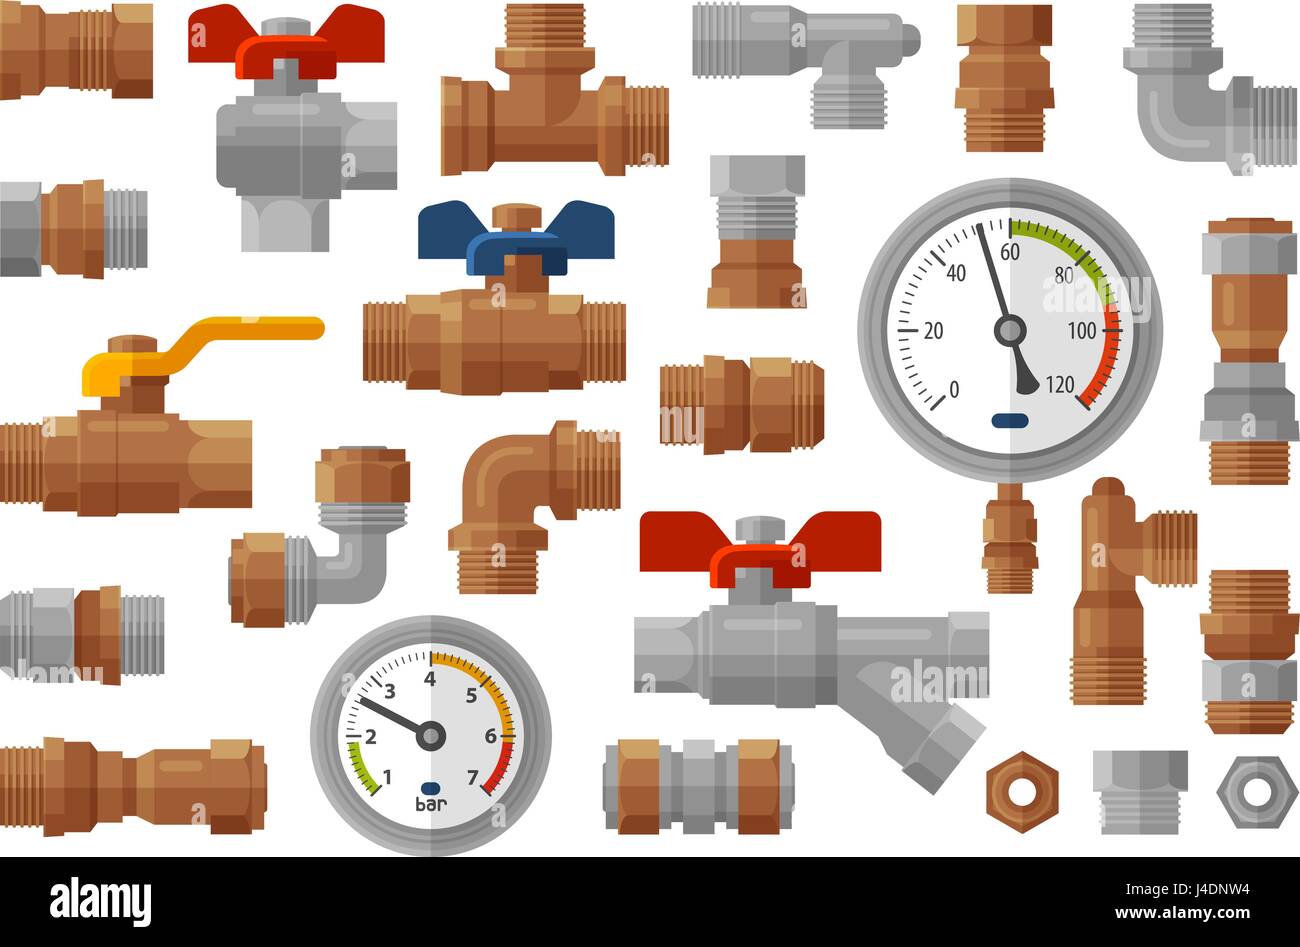 Sanitary engineering, plumbing equipment set icons. Manometer pressure, meter, industry, fittings, water supply concept. Vector illustration Stock Vector